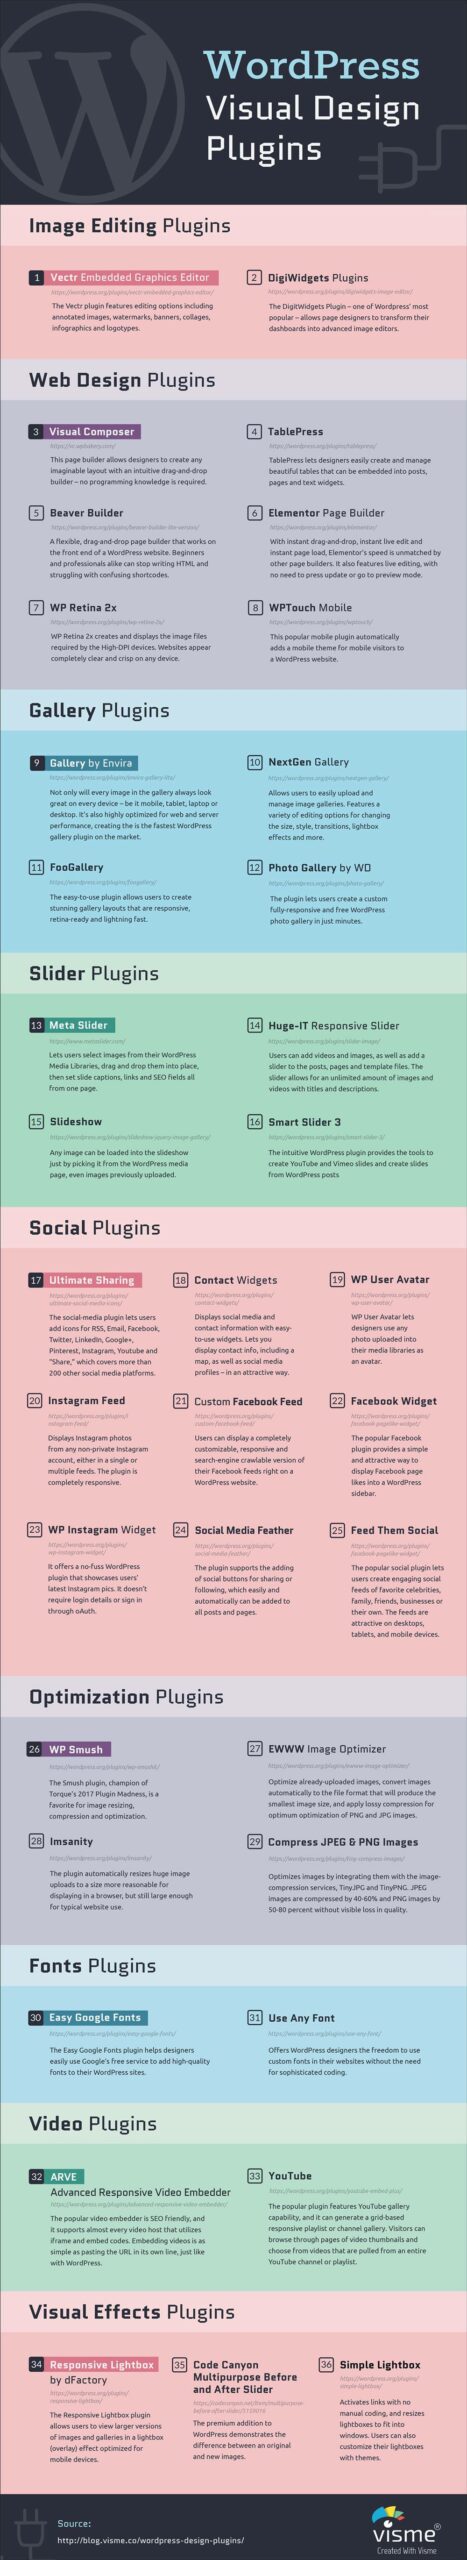 Visual Design WordPress Plugins infographic 